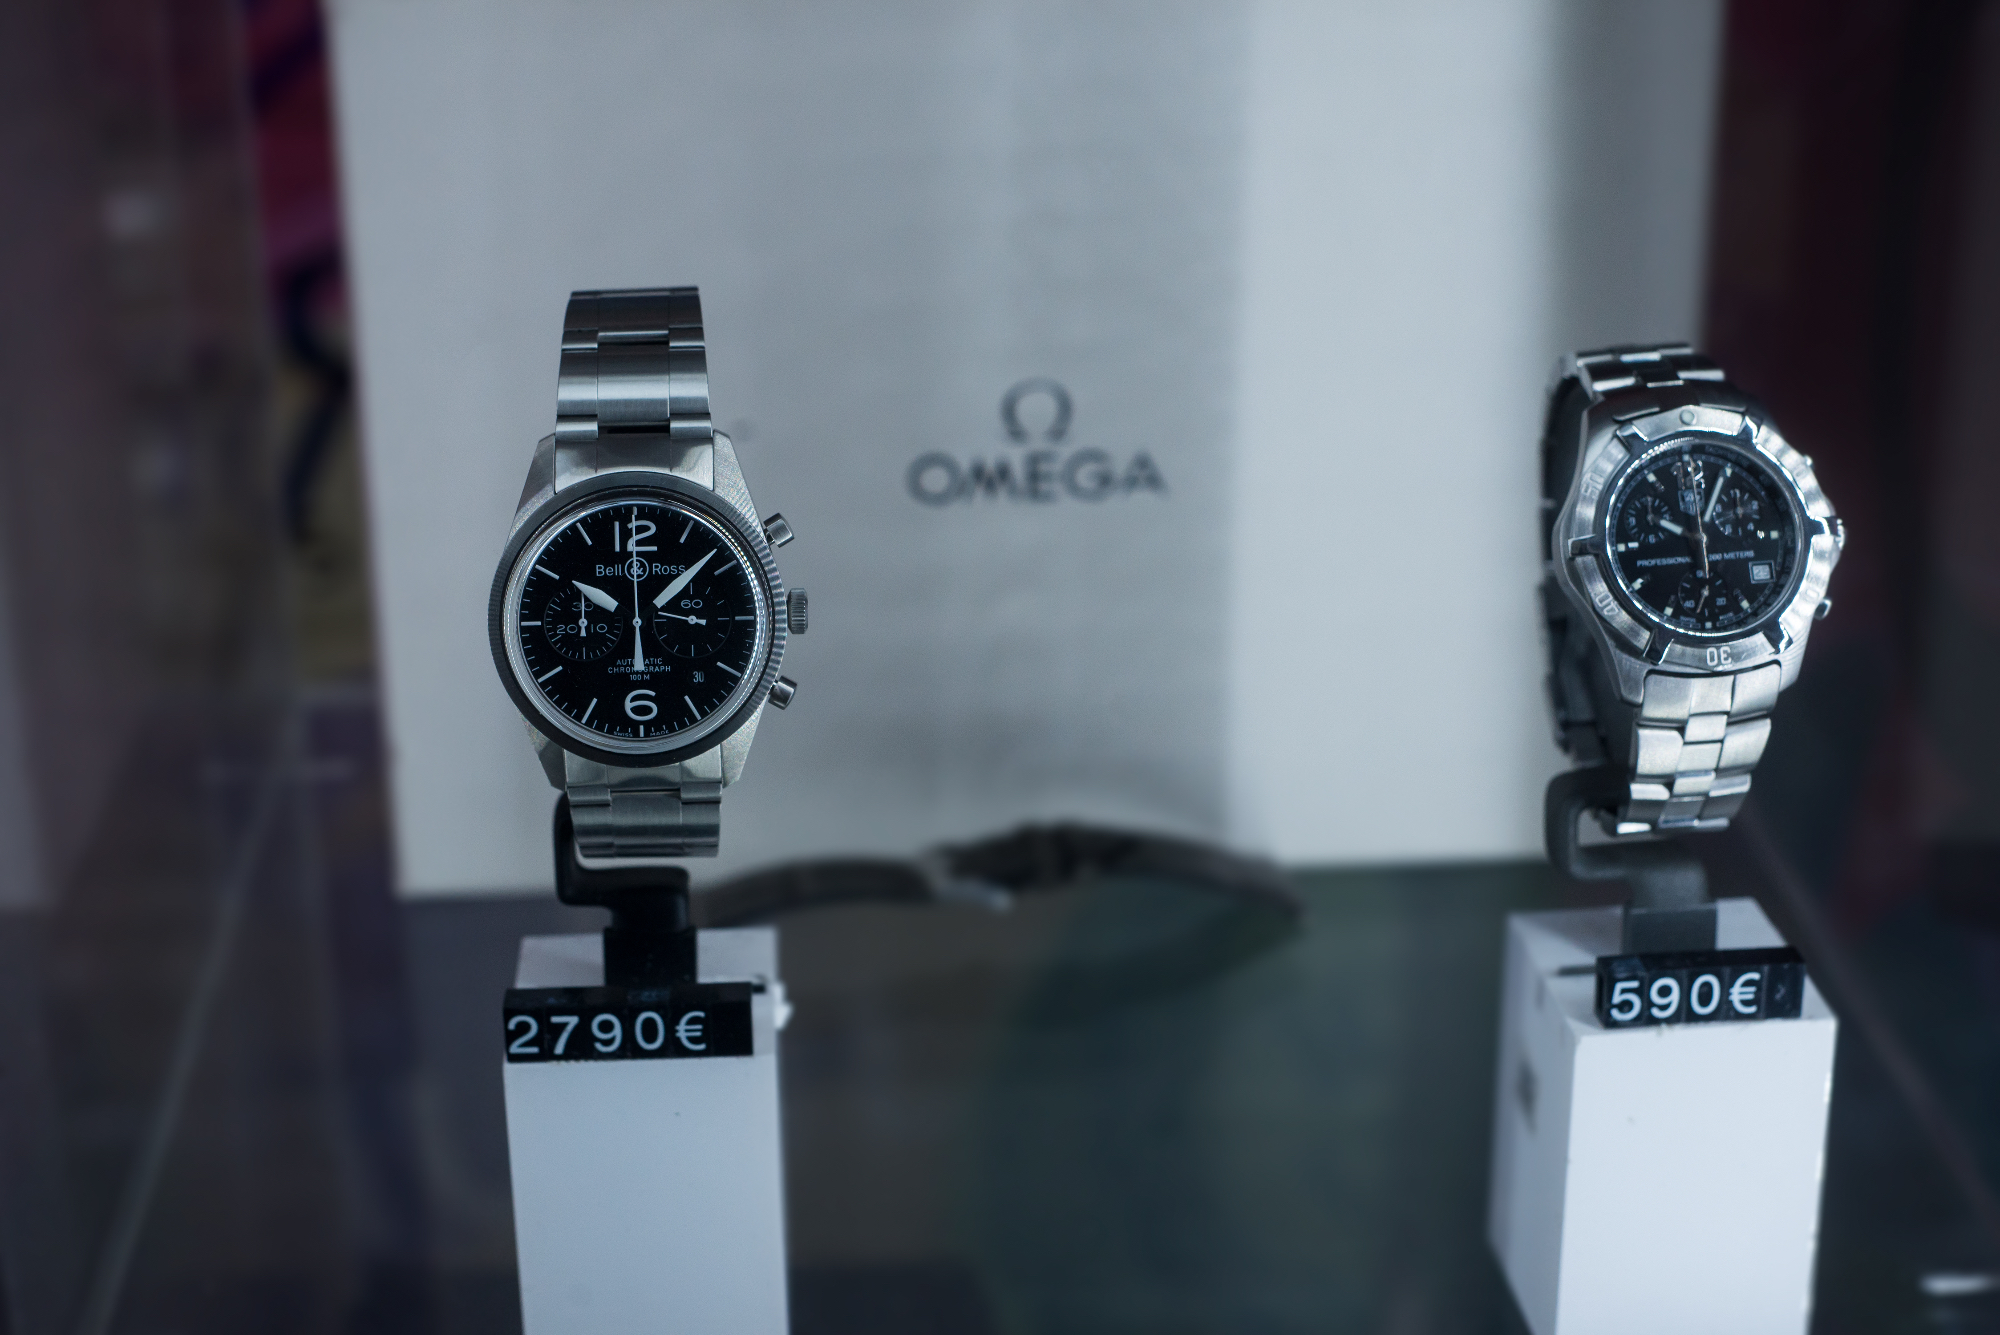 Je li Omega rabljeni sat prigodan poklon?